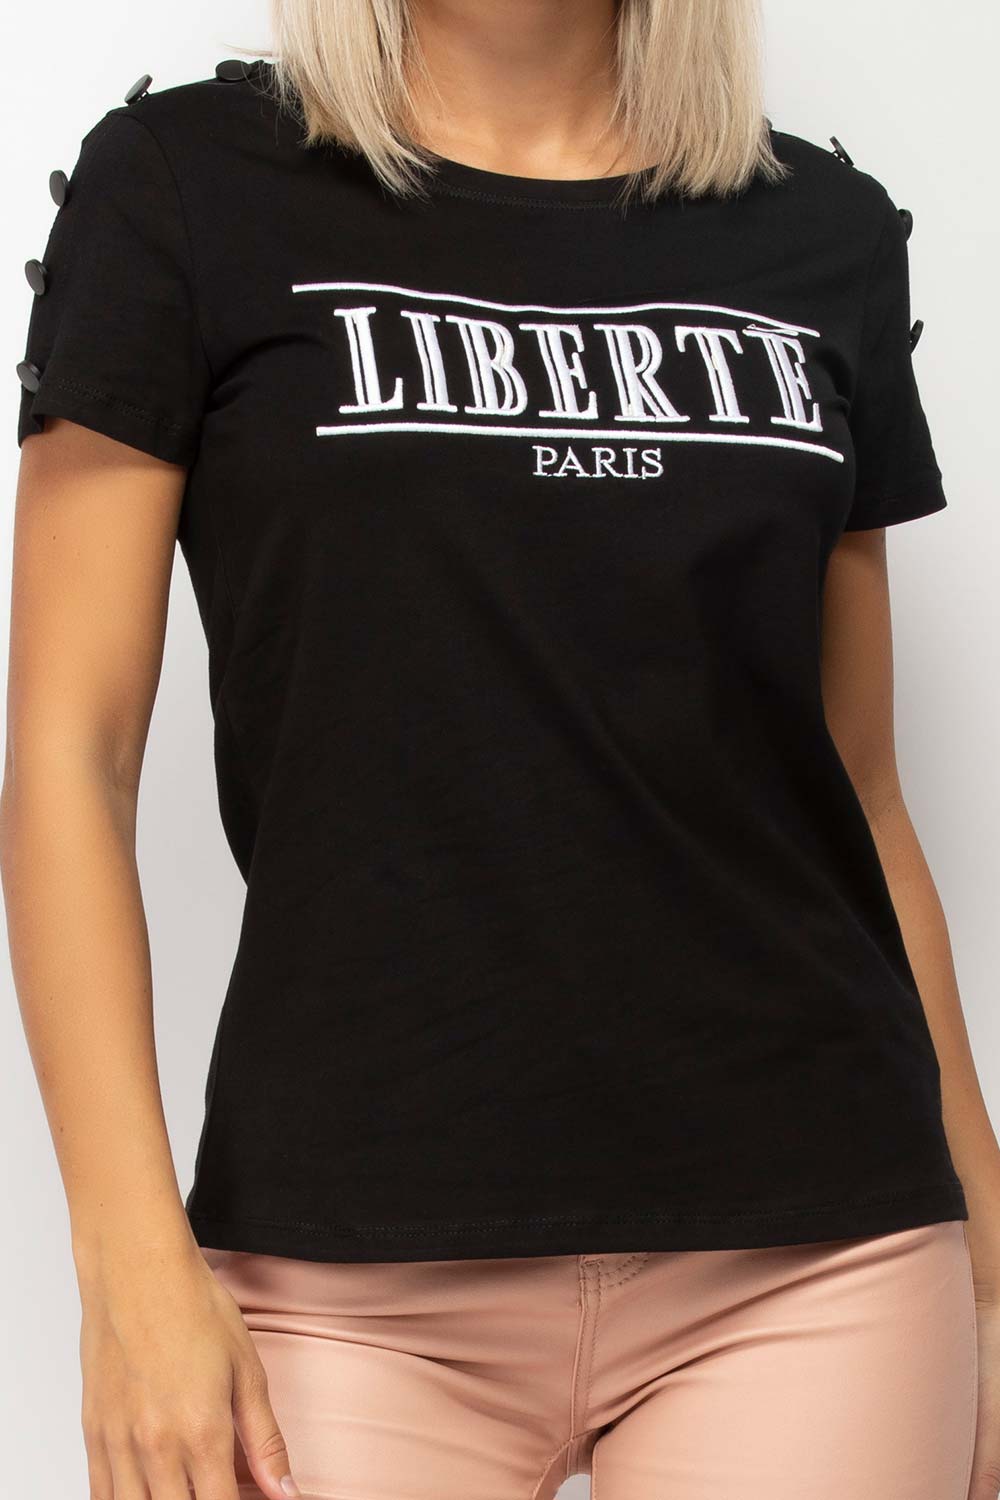 Black Liberte Paris Embroidery T Shirt Balmain Inspired –